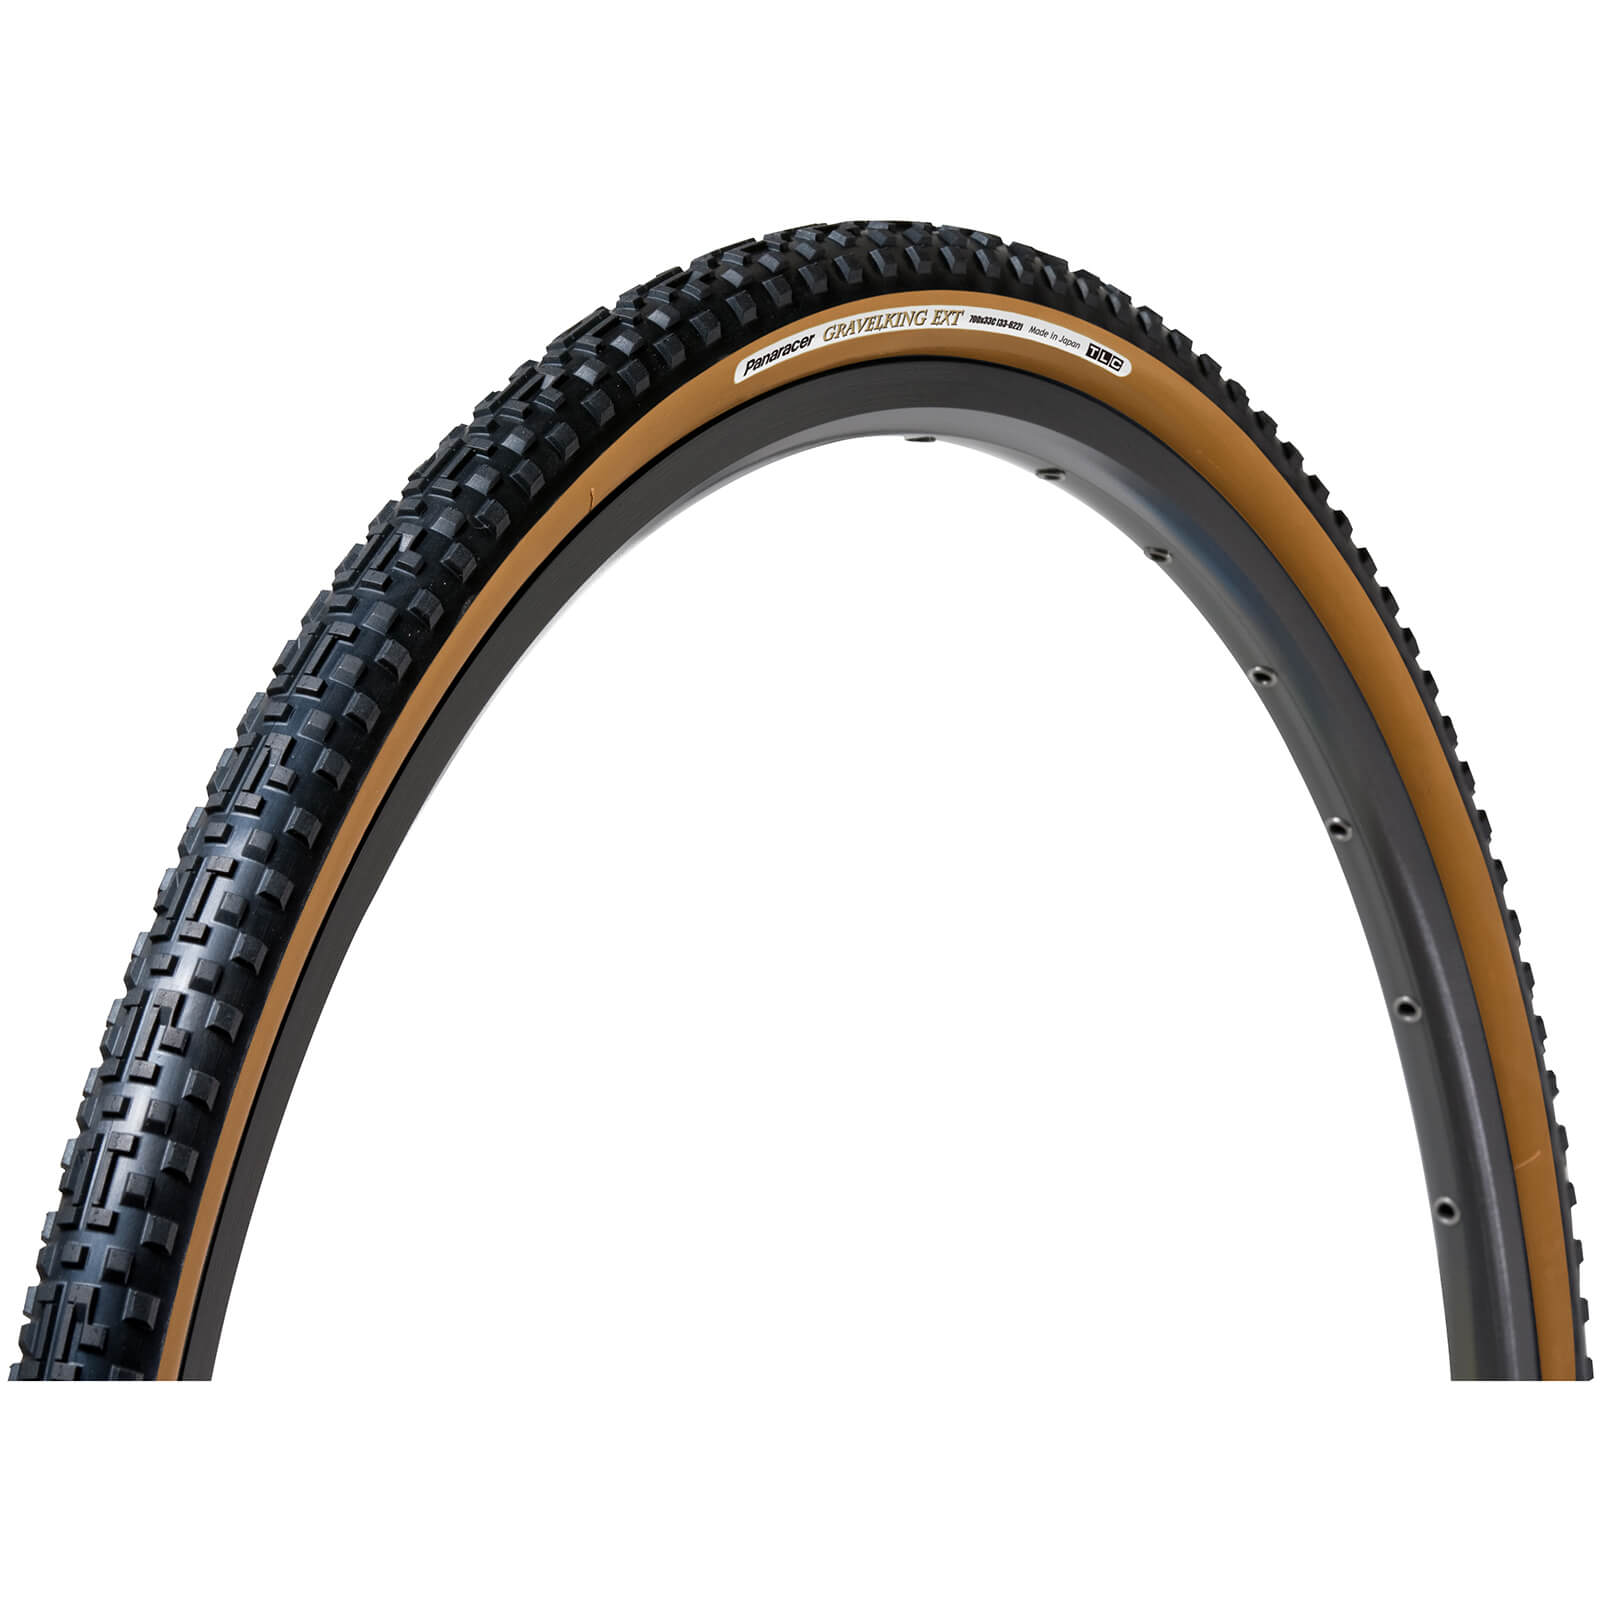 Panaracer Gravel King EXT TLC Folding Gravel Tyre - 700 x 38c - black/brown